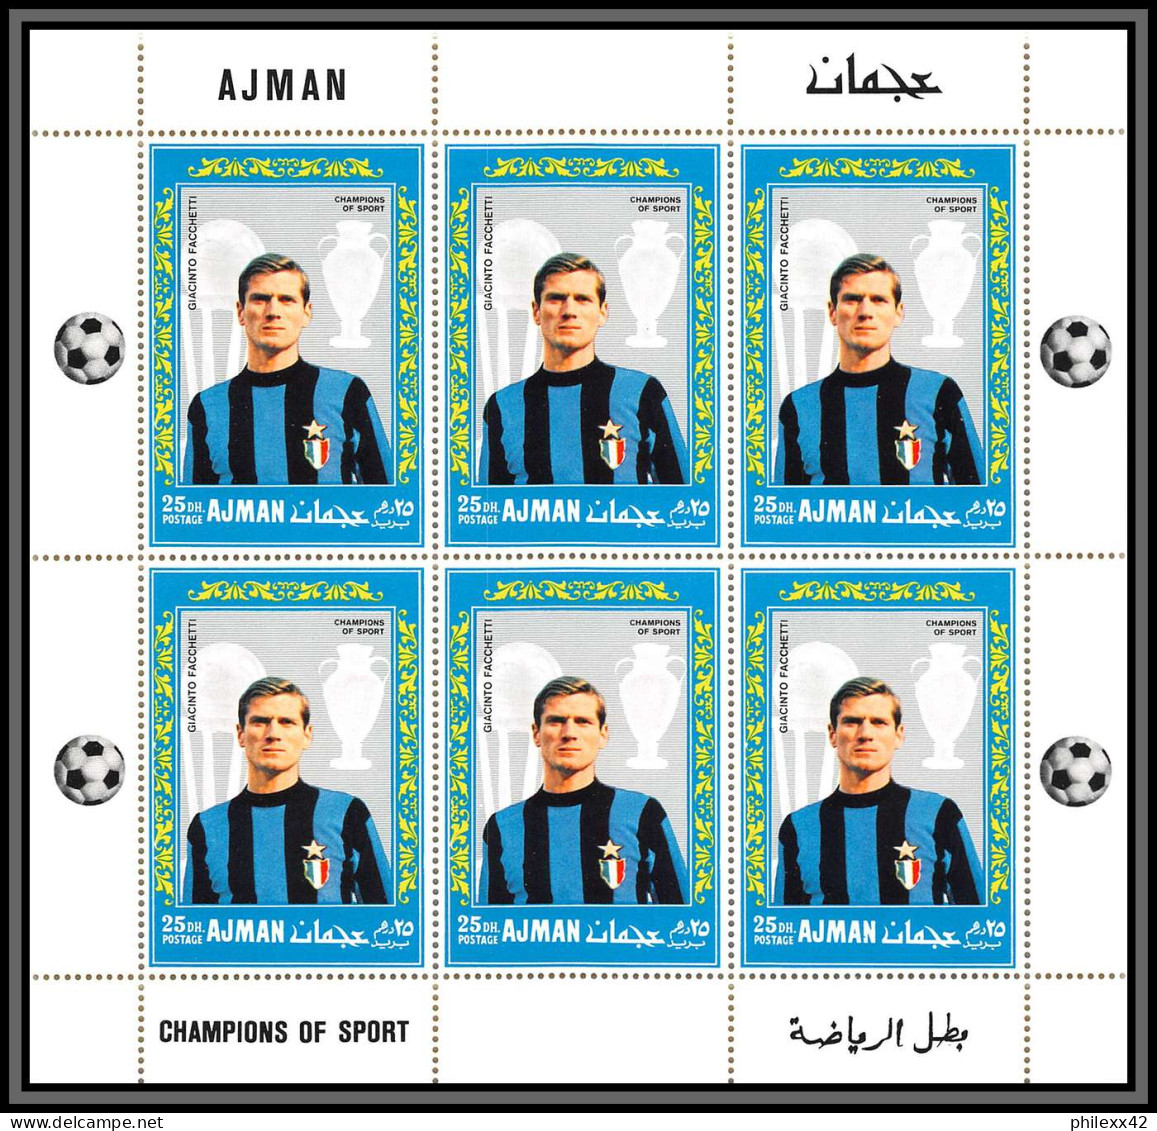 Ajman - 4536 N°303/308 A inter de milan football players calcio soccer suarez neuf ** MNH feuille complete (sheet)